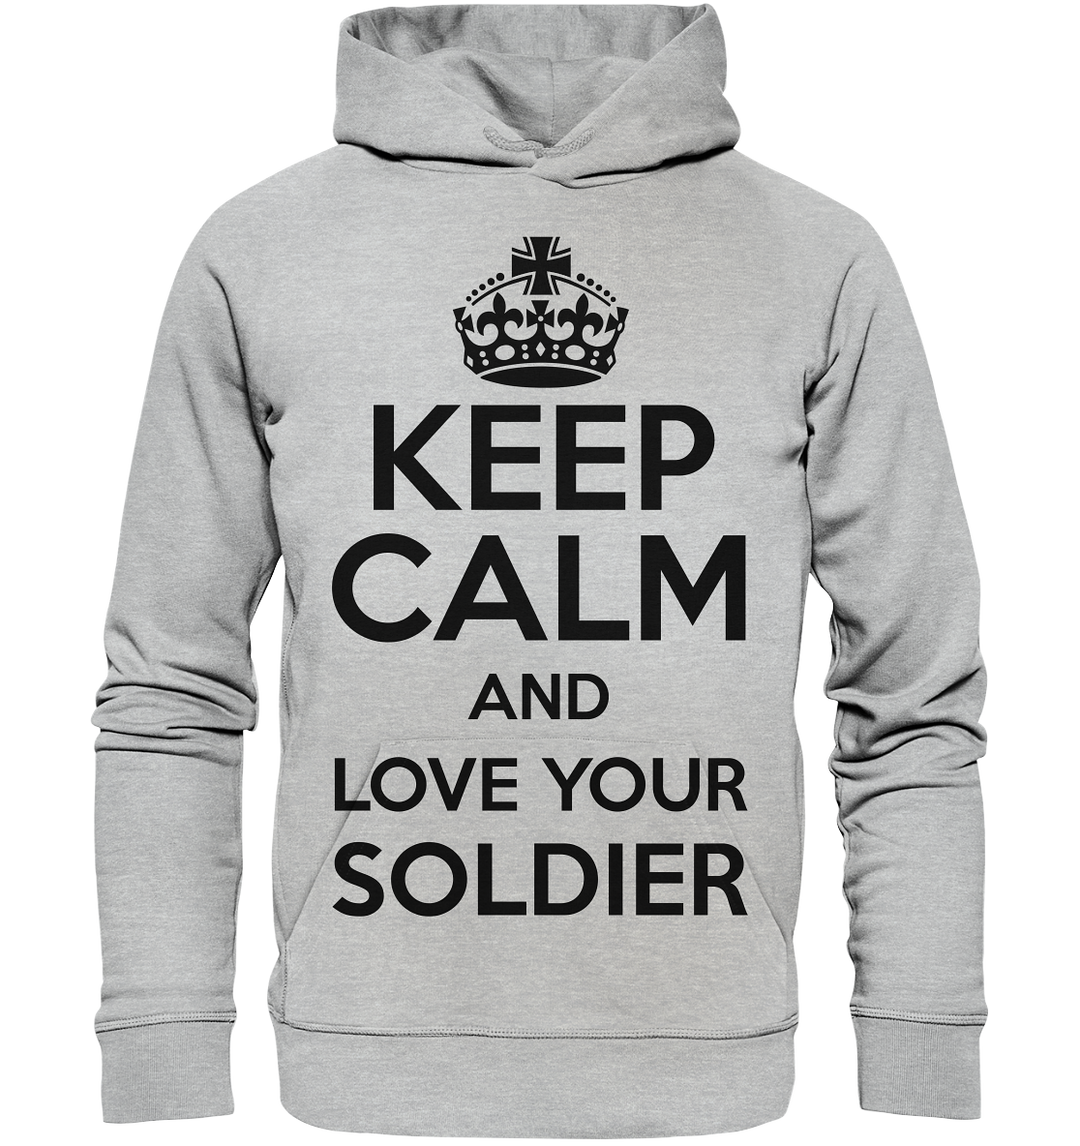 "Love your Soldier" - Premium Unisex Hoodie